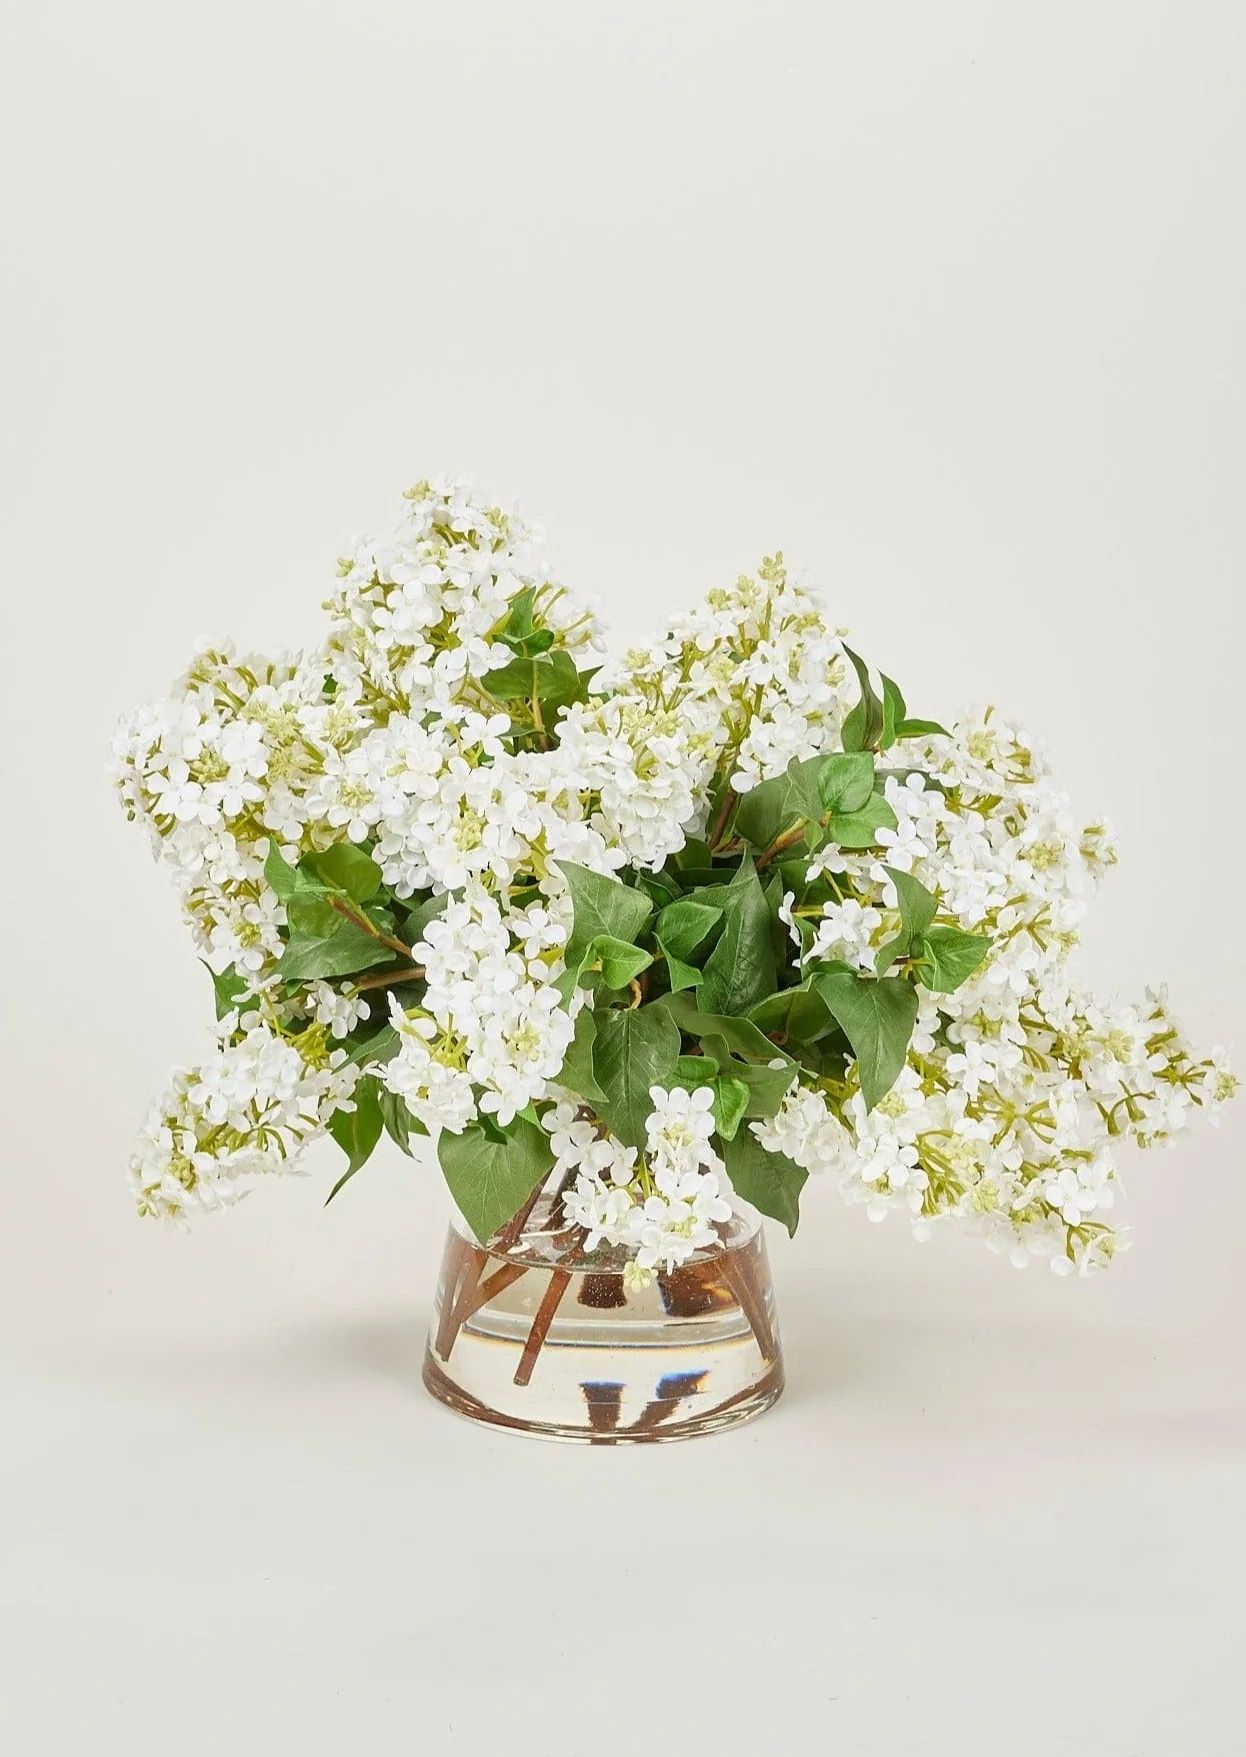 Faux Lilac Stems in Vase | Elevated Floral Arrangements at Afloral.com | Afloral